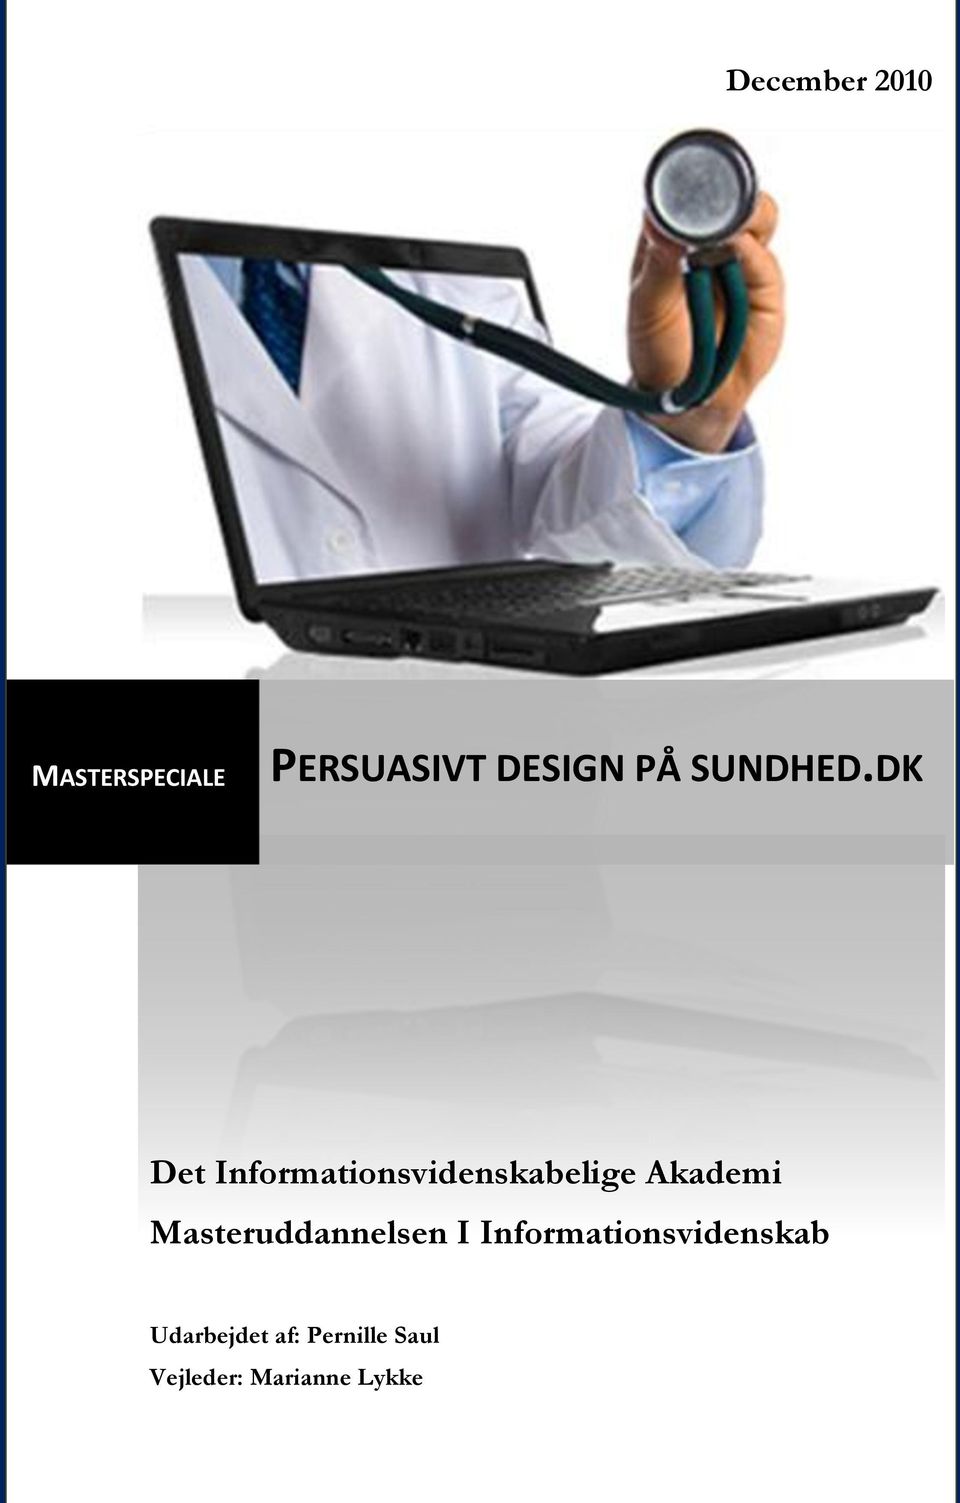 DK Det Informationsvidenskabelige Akademi